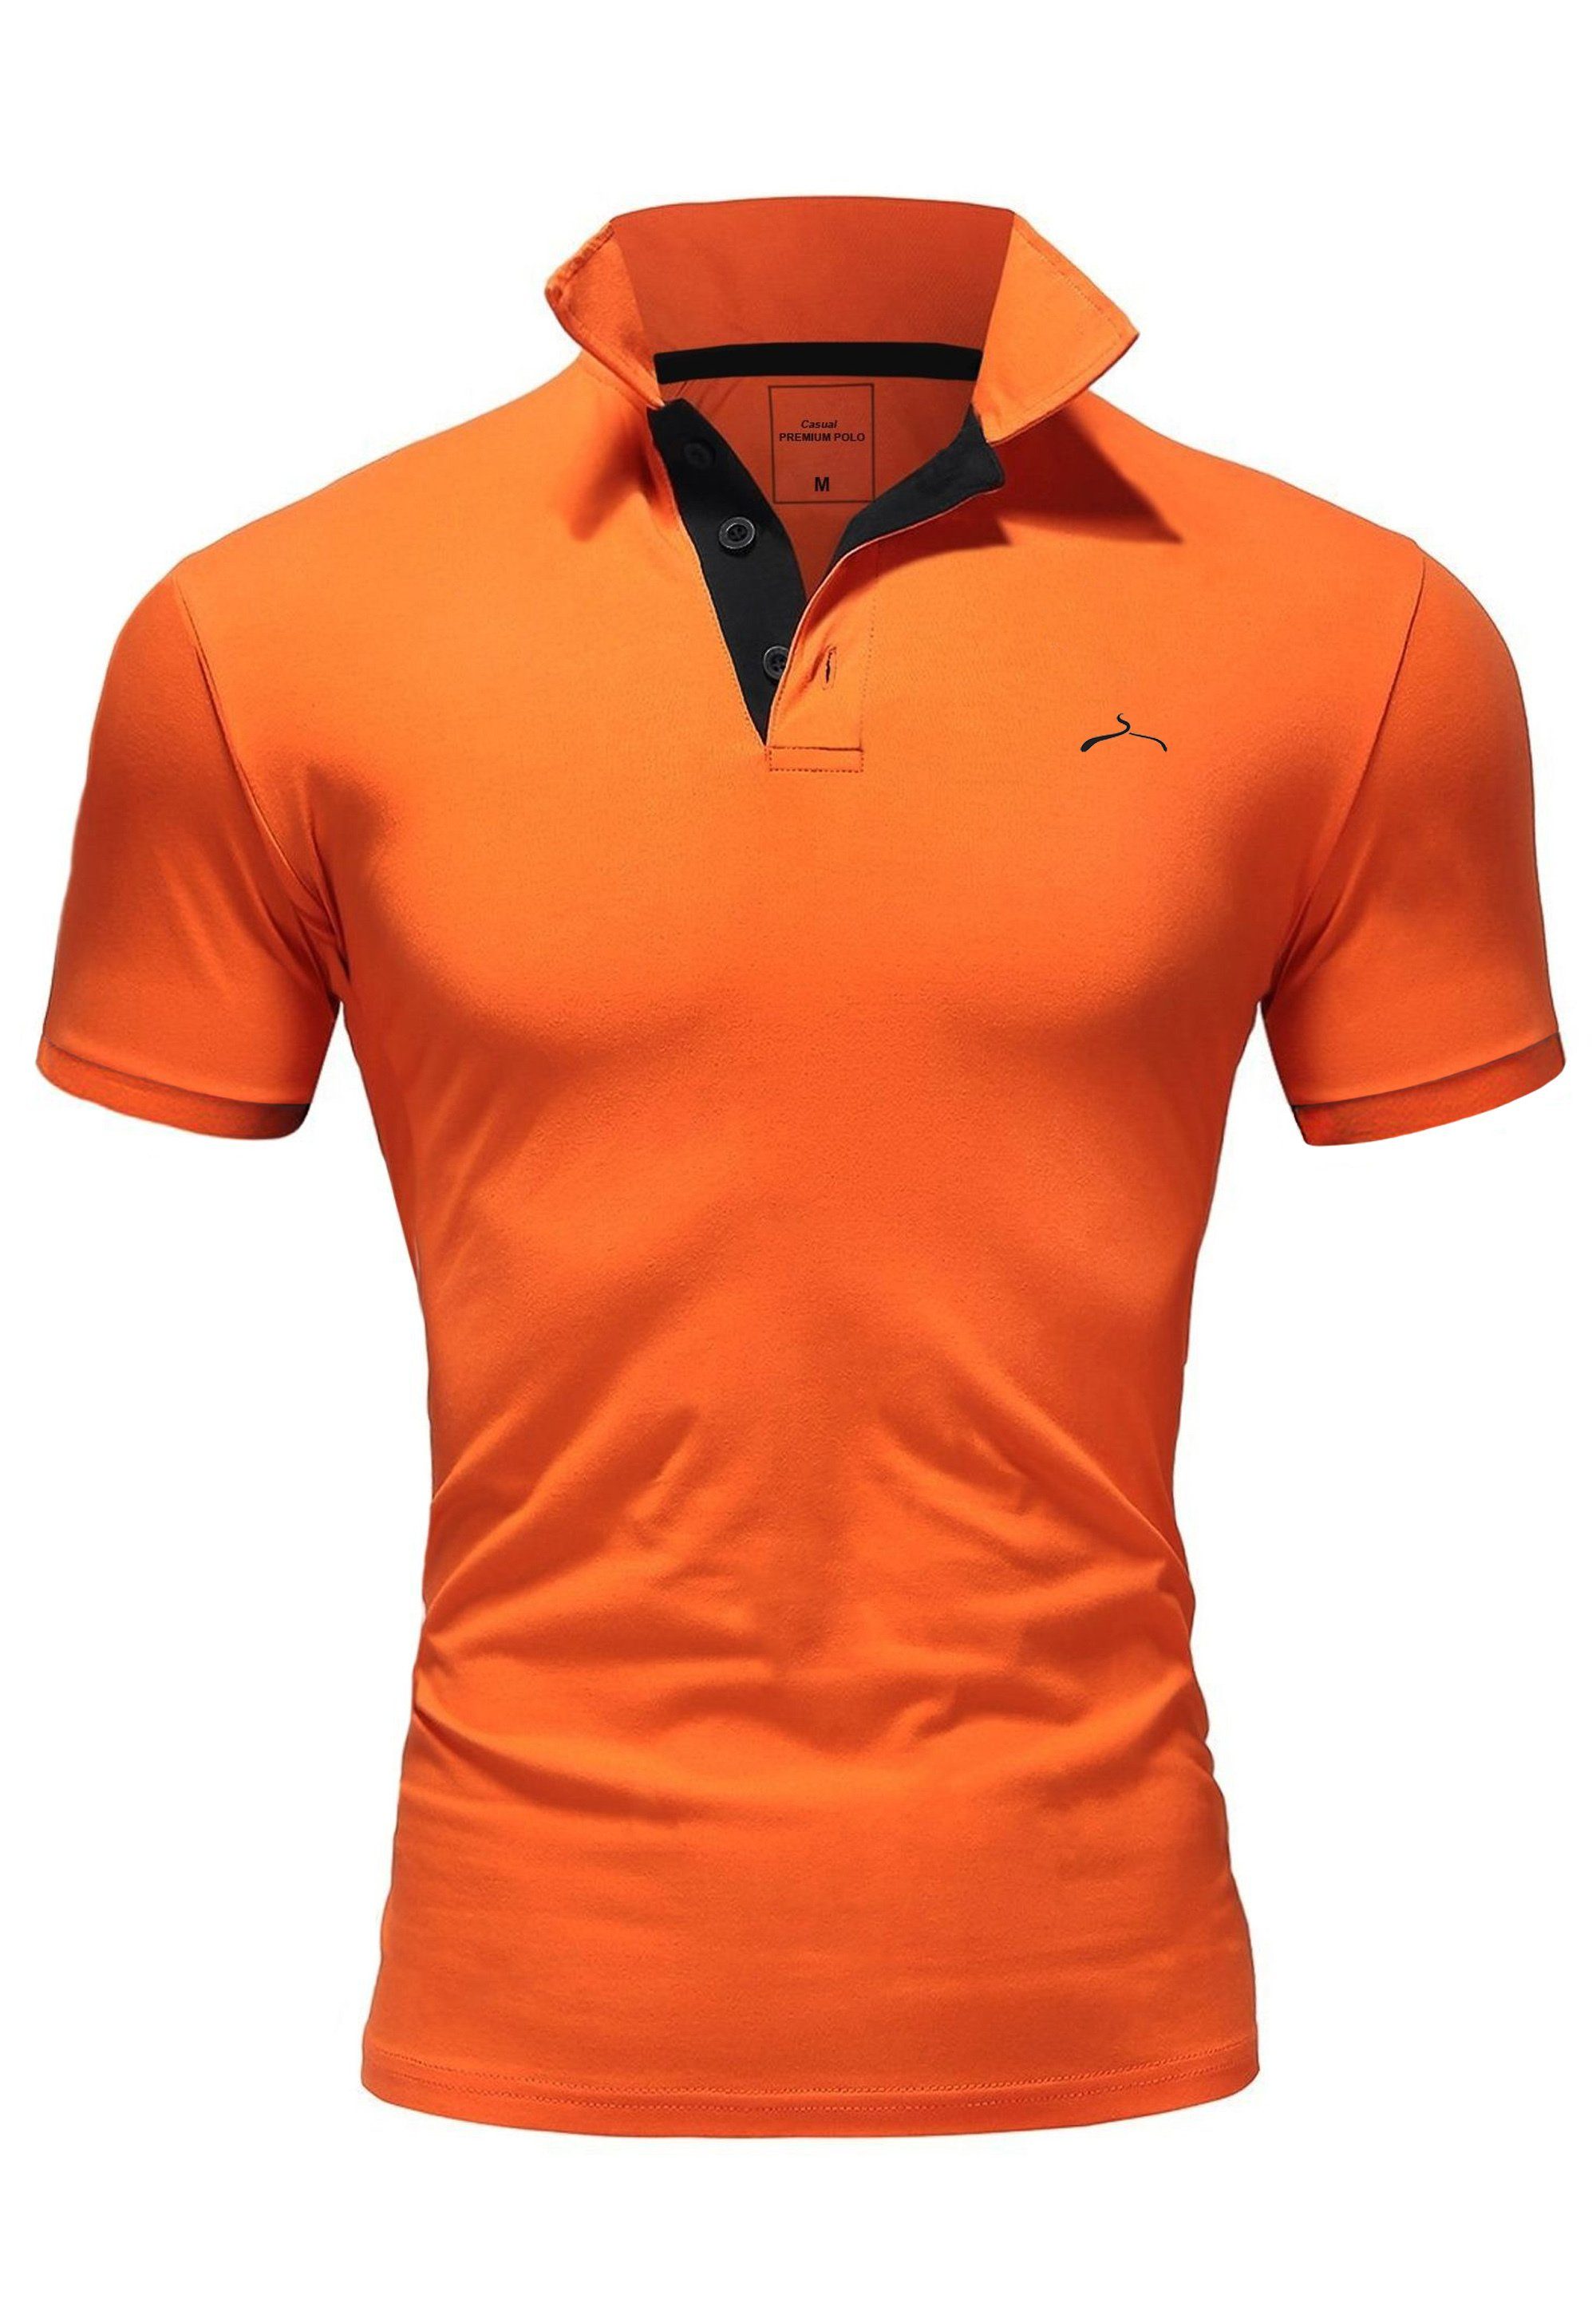 Poloshirt Orange-Schwarz SOULSTAR MPPREMIUM